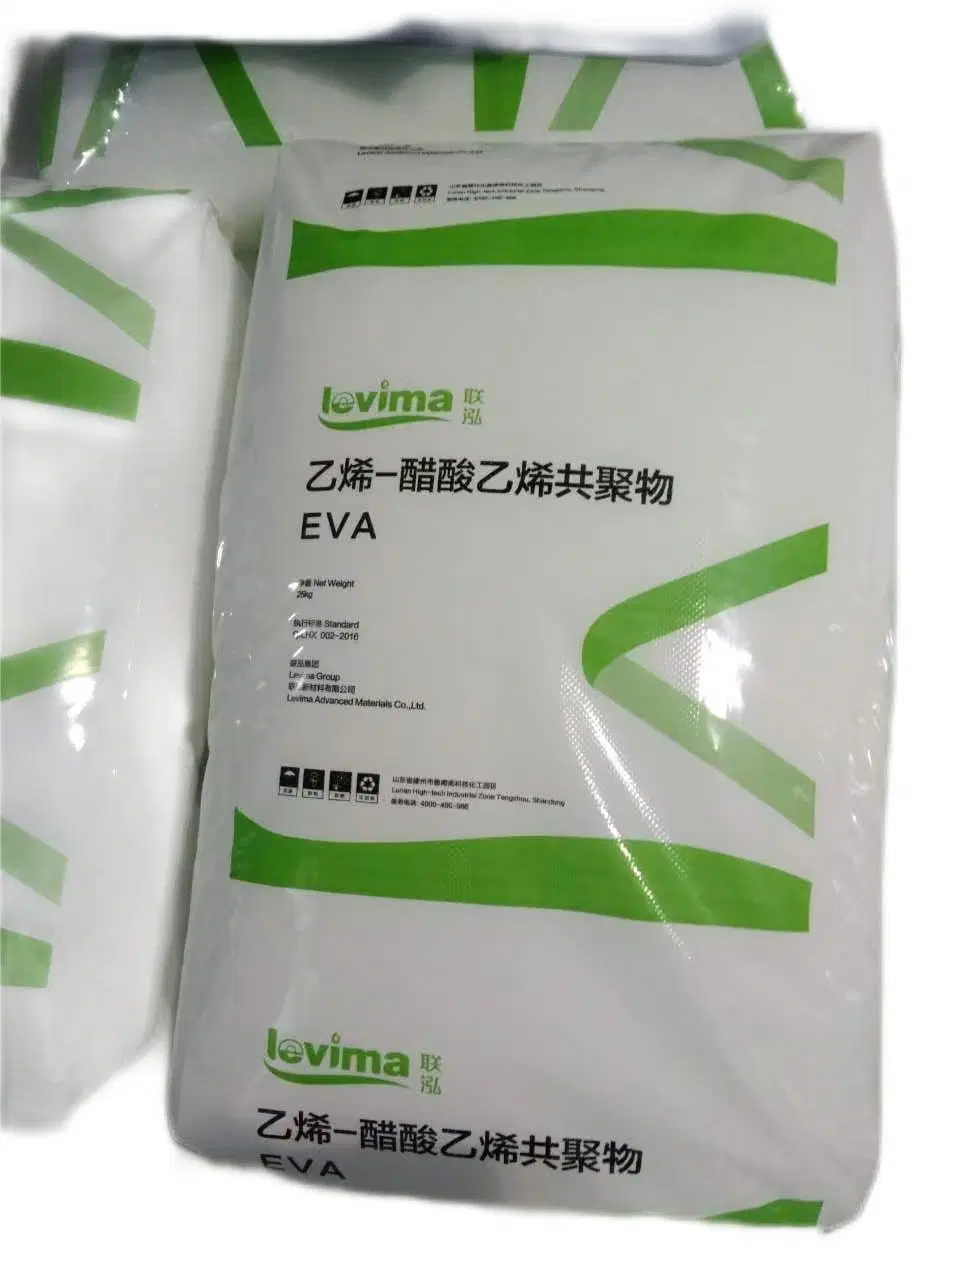 EVA Foam UL02528 für Schmelzklebstoffe